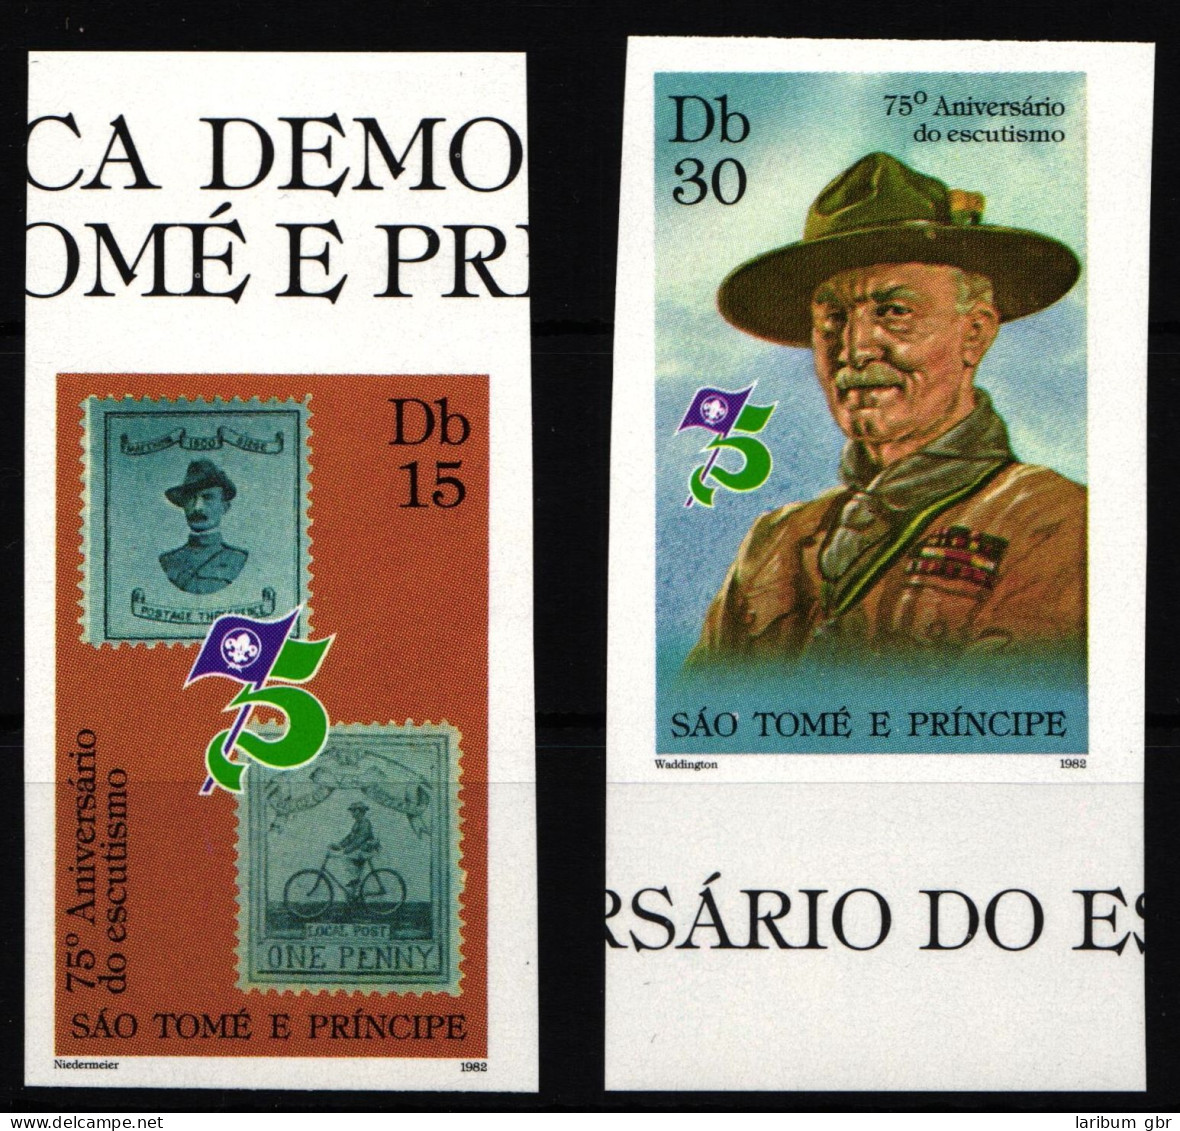 Sao Tome 769-770 I B Postfrisch Pfadfinder #HR518 - São Tomé Und Príncipe